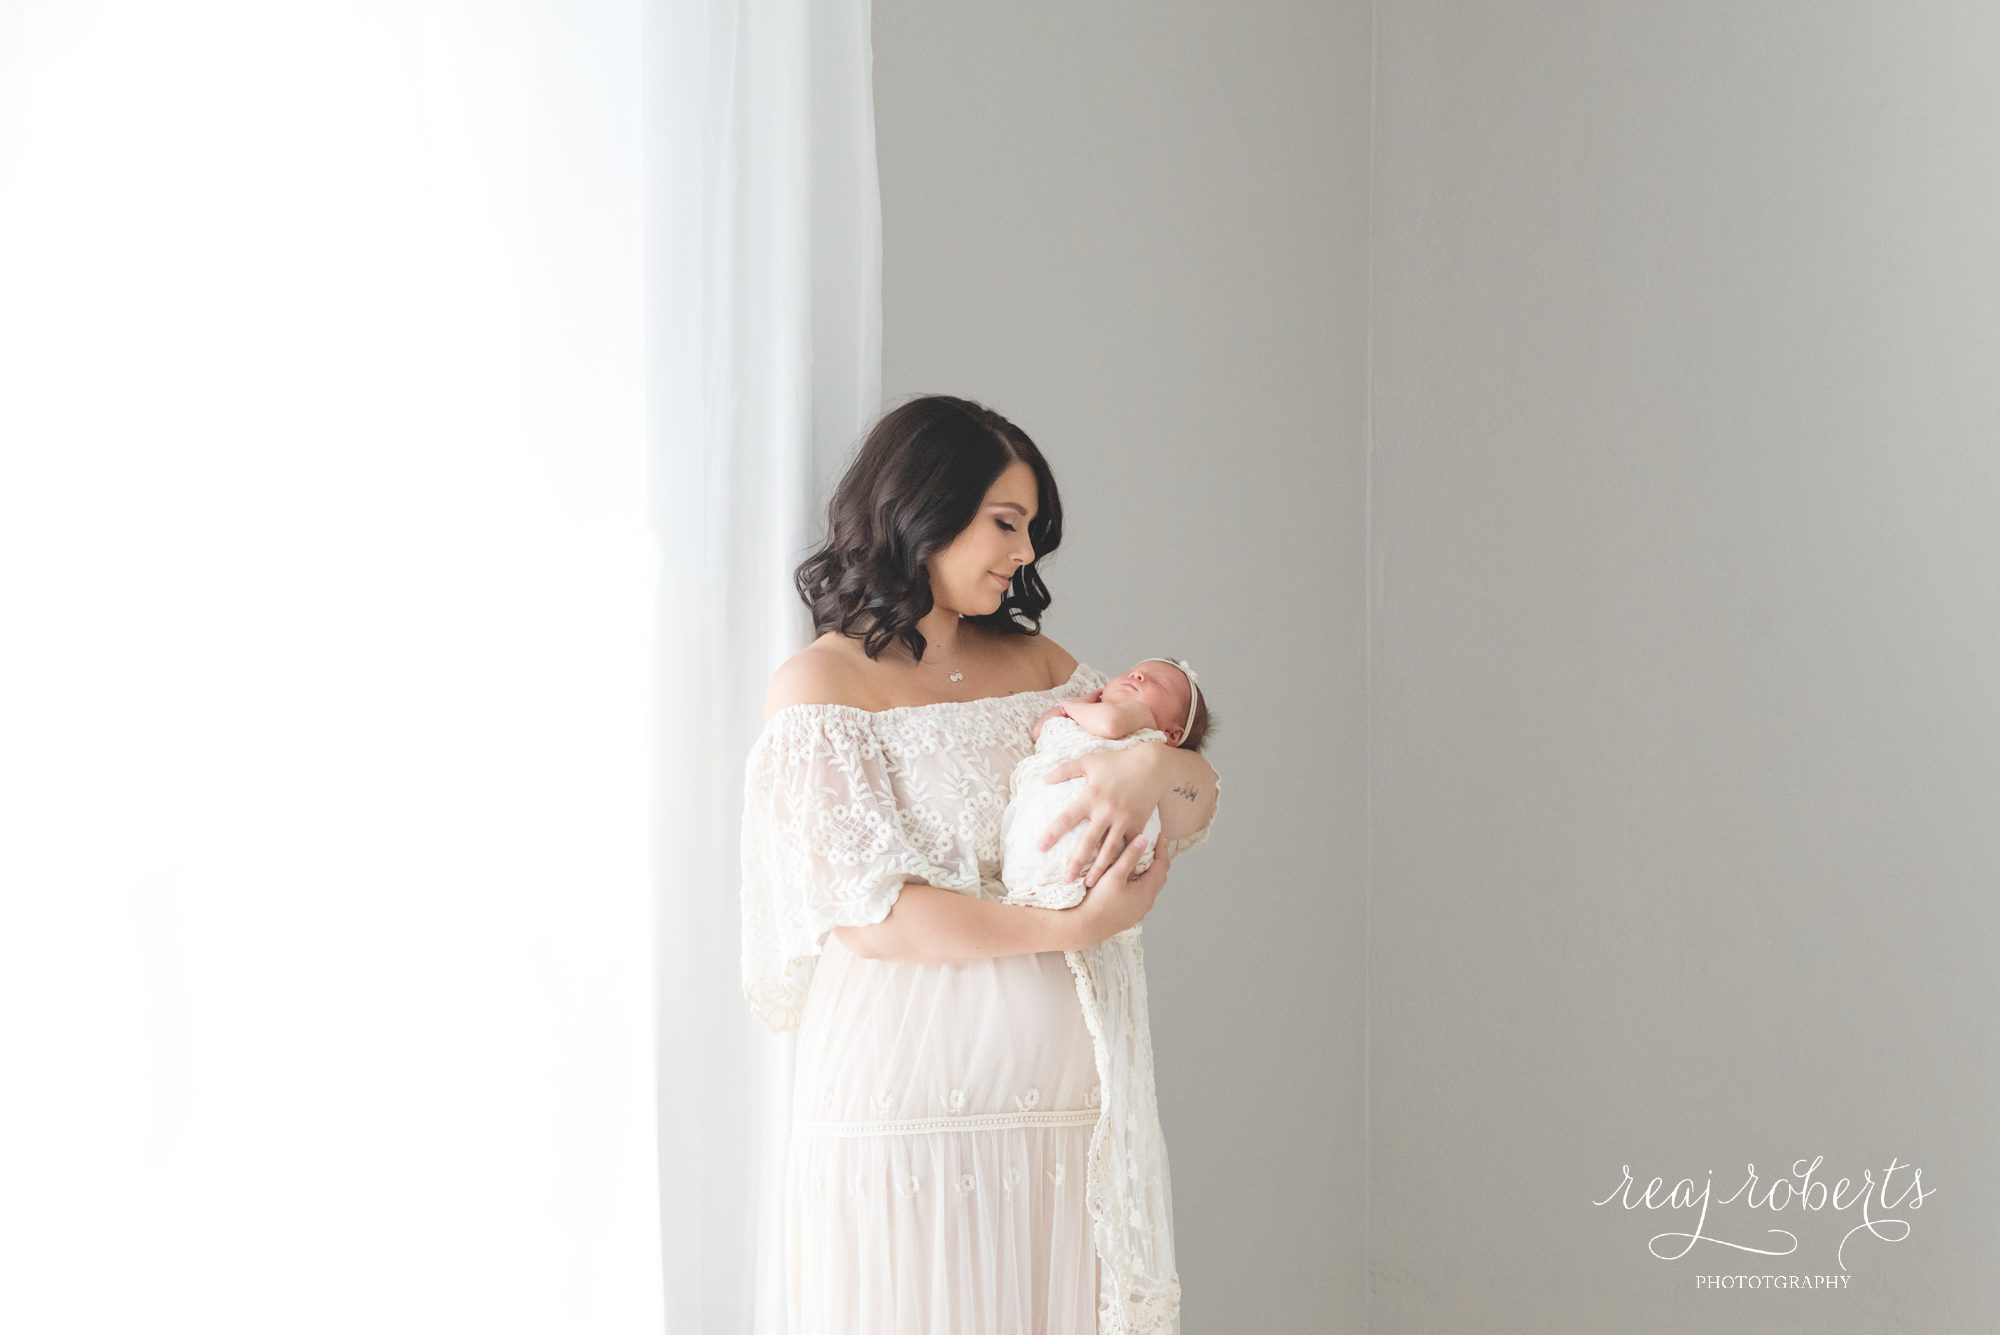 newborn photos baby with mom | Reaj Roberts Photography